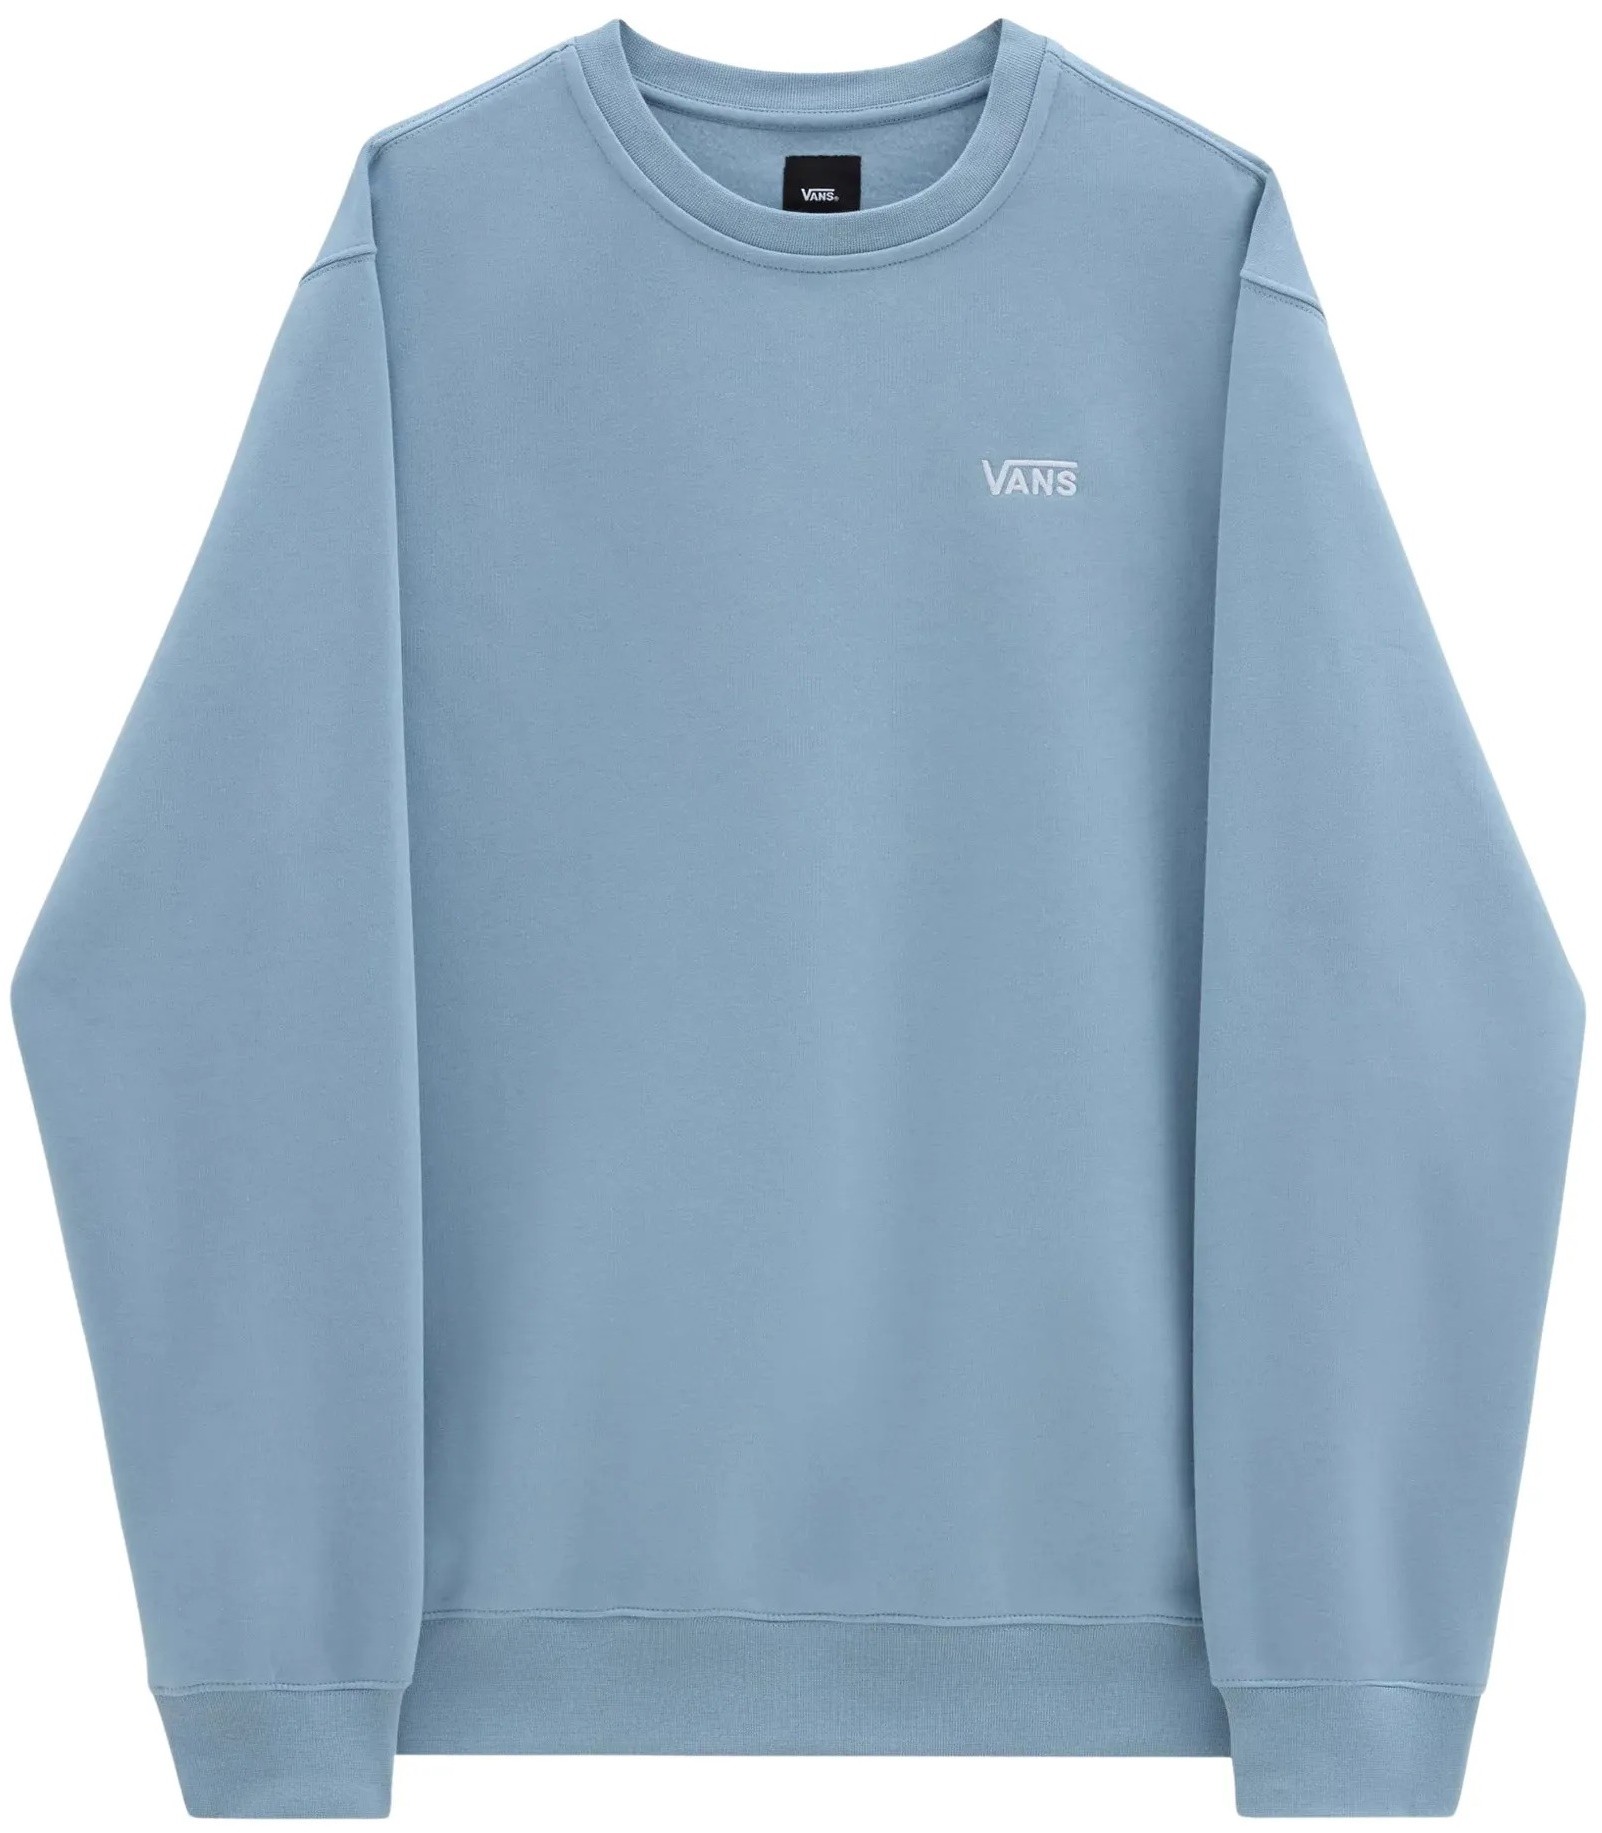 Vans Core Basic Crew Dusb Sweatshirt